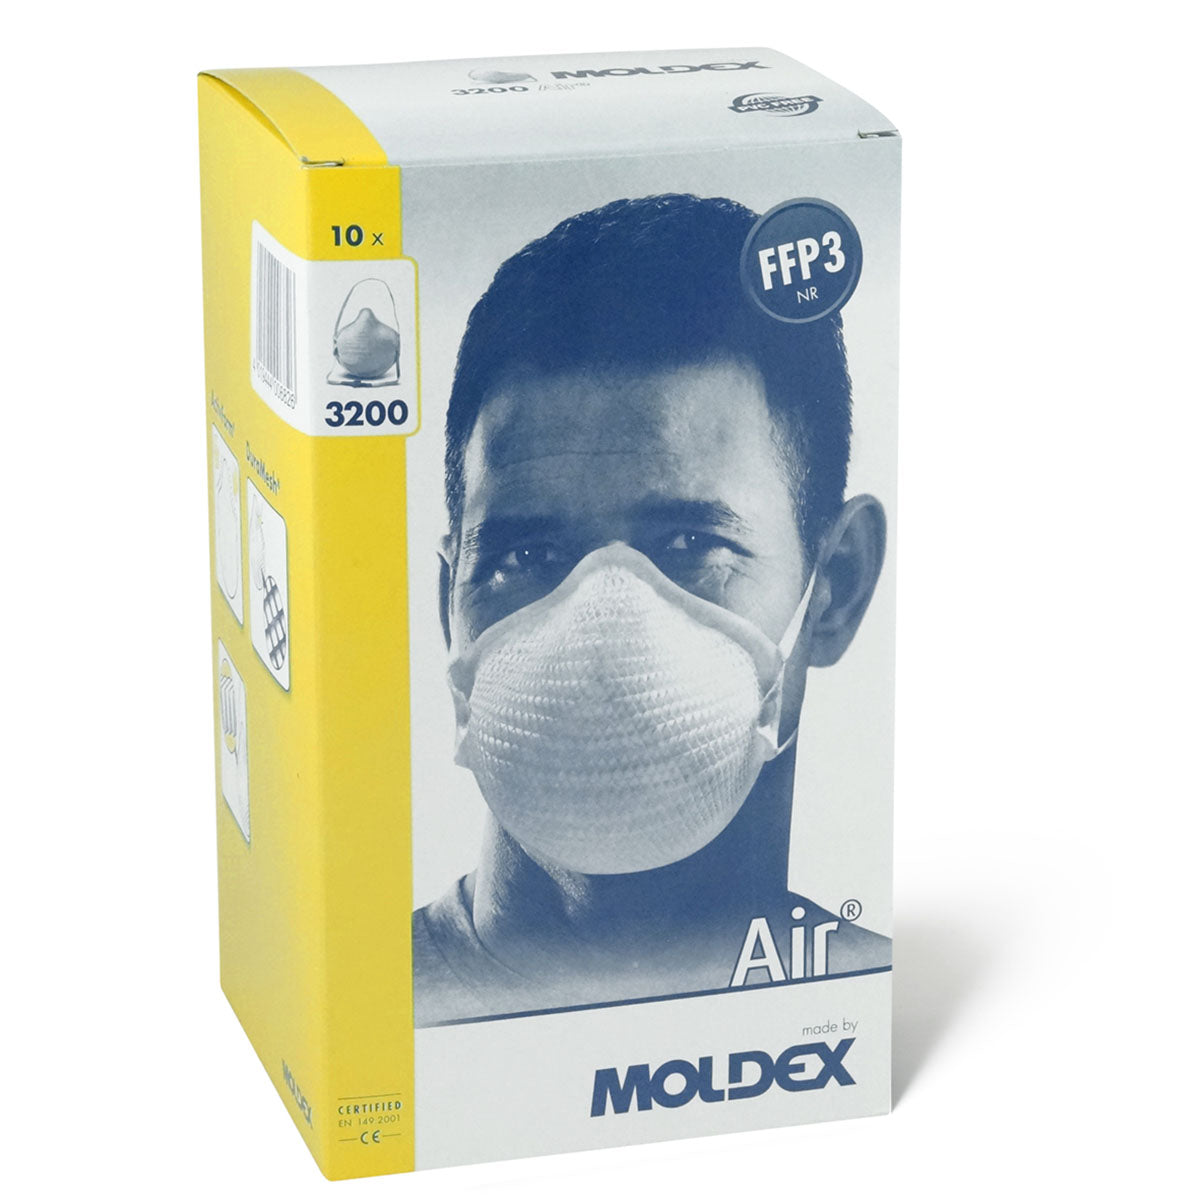 Moldex 3200 Air FFP3 NR D Type IIR Masks Size M/L Box of 10